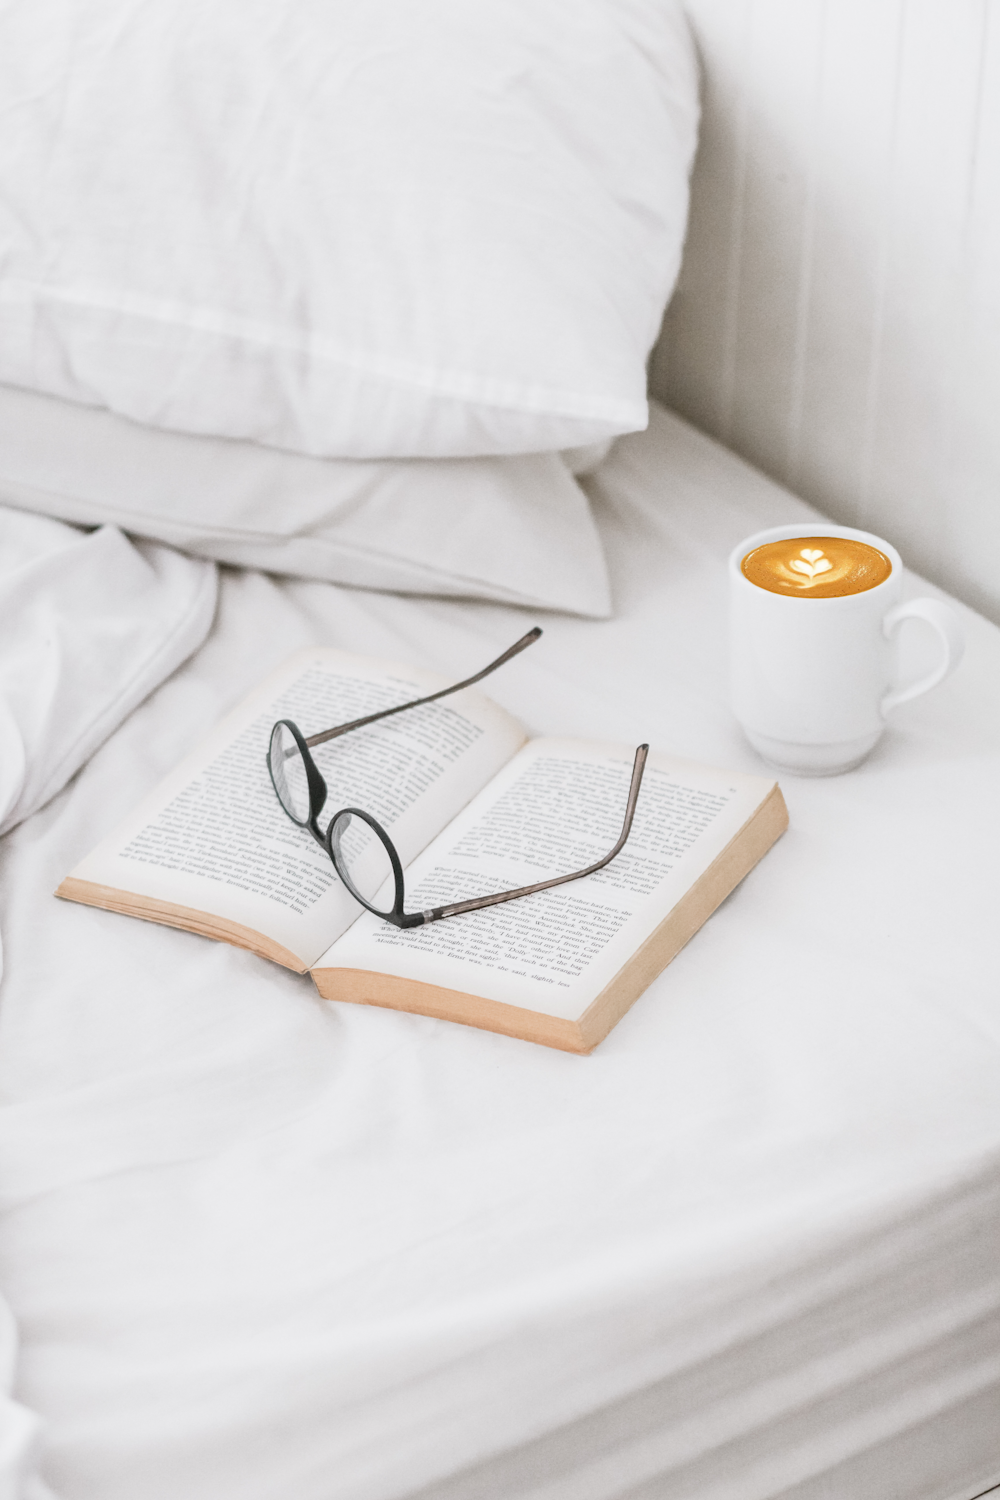 coffee on ceramic mug, book, and eyeglass on bed